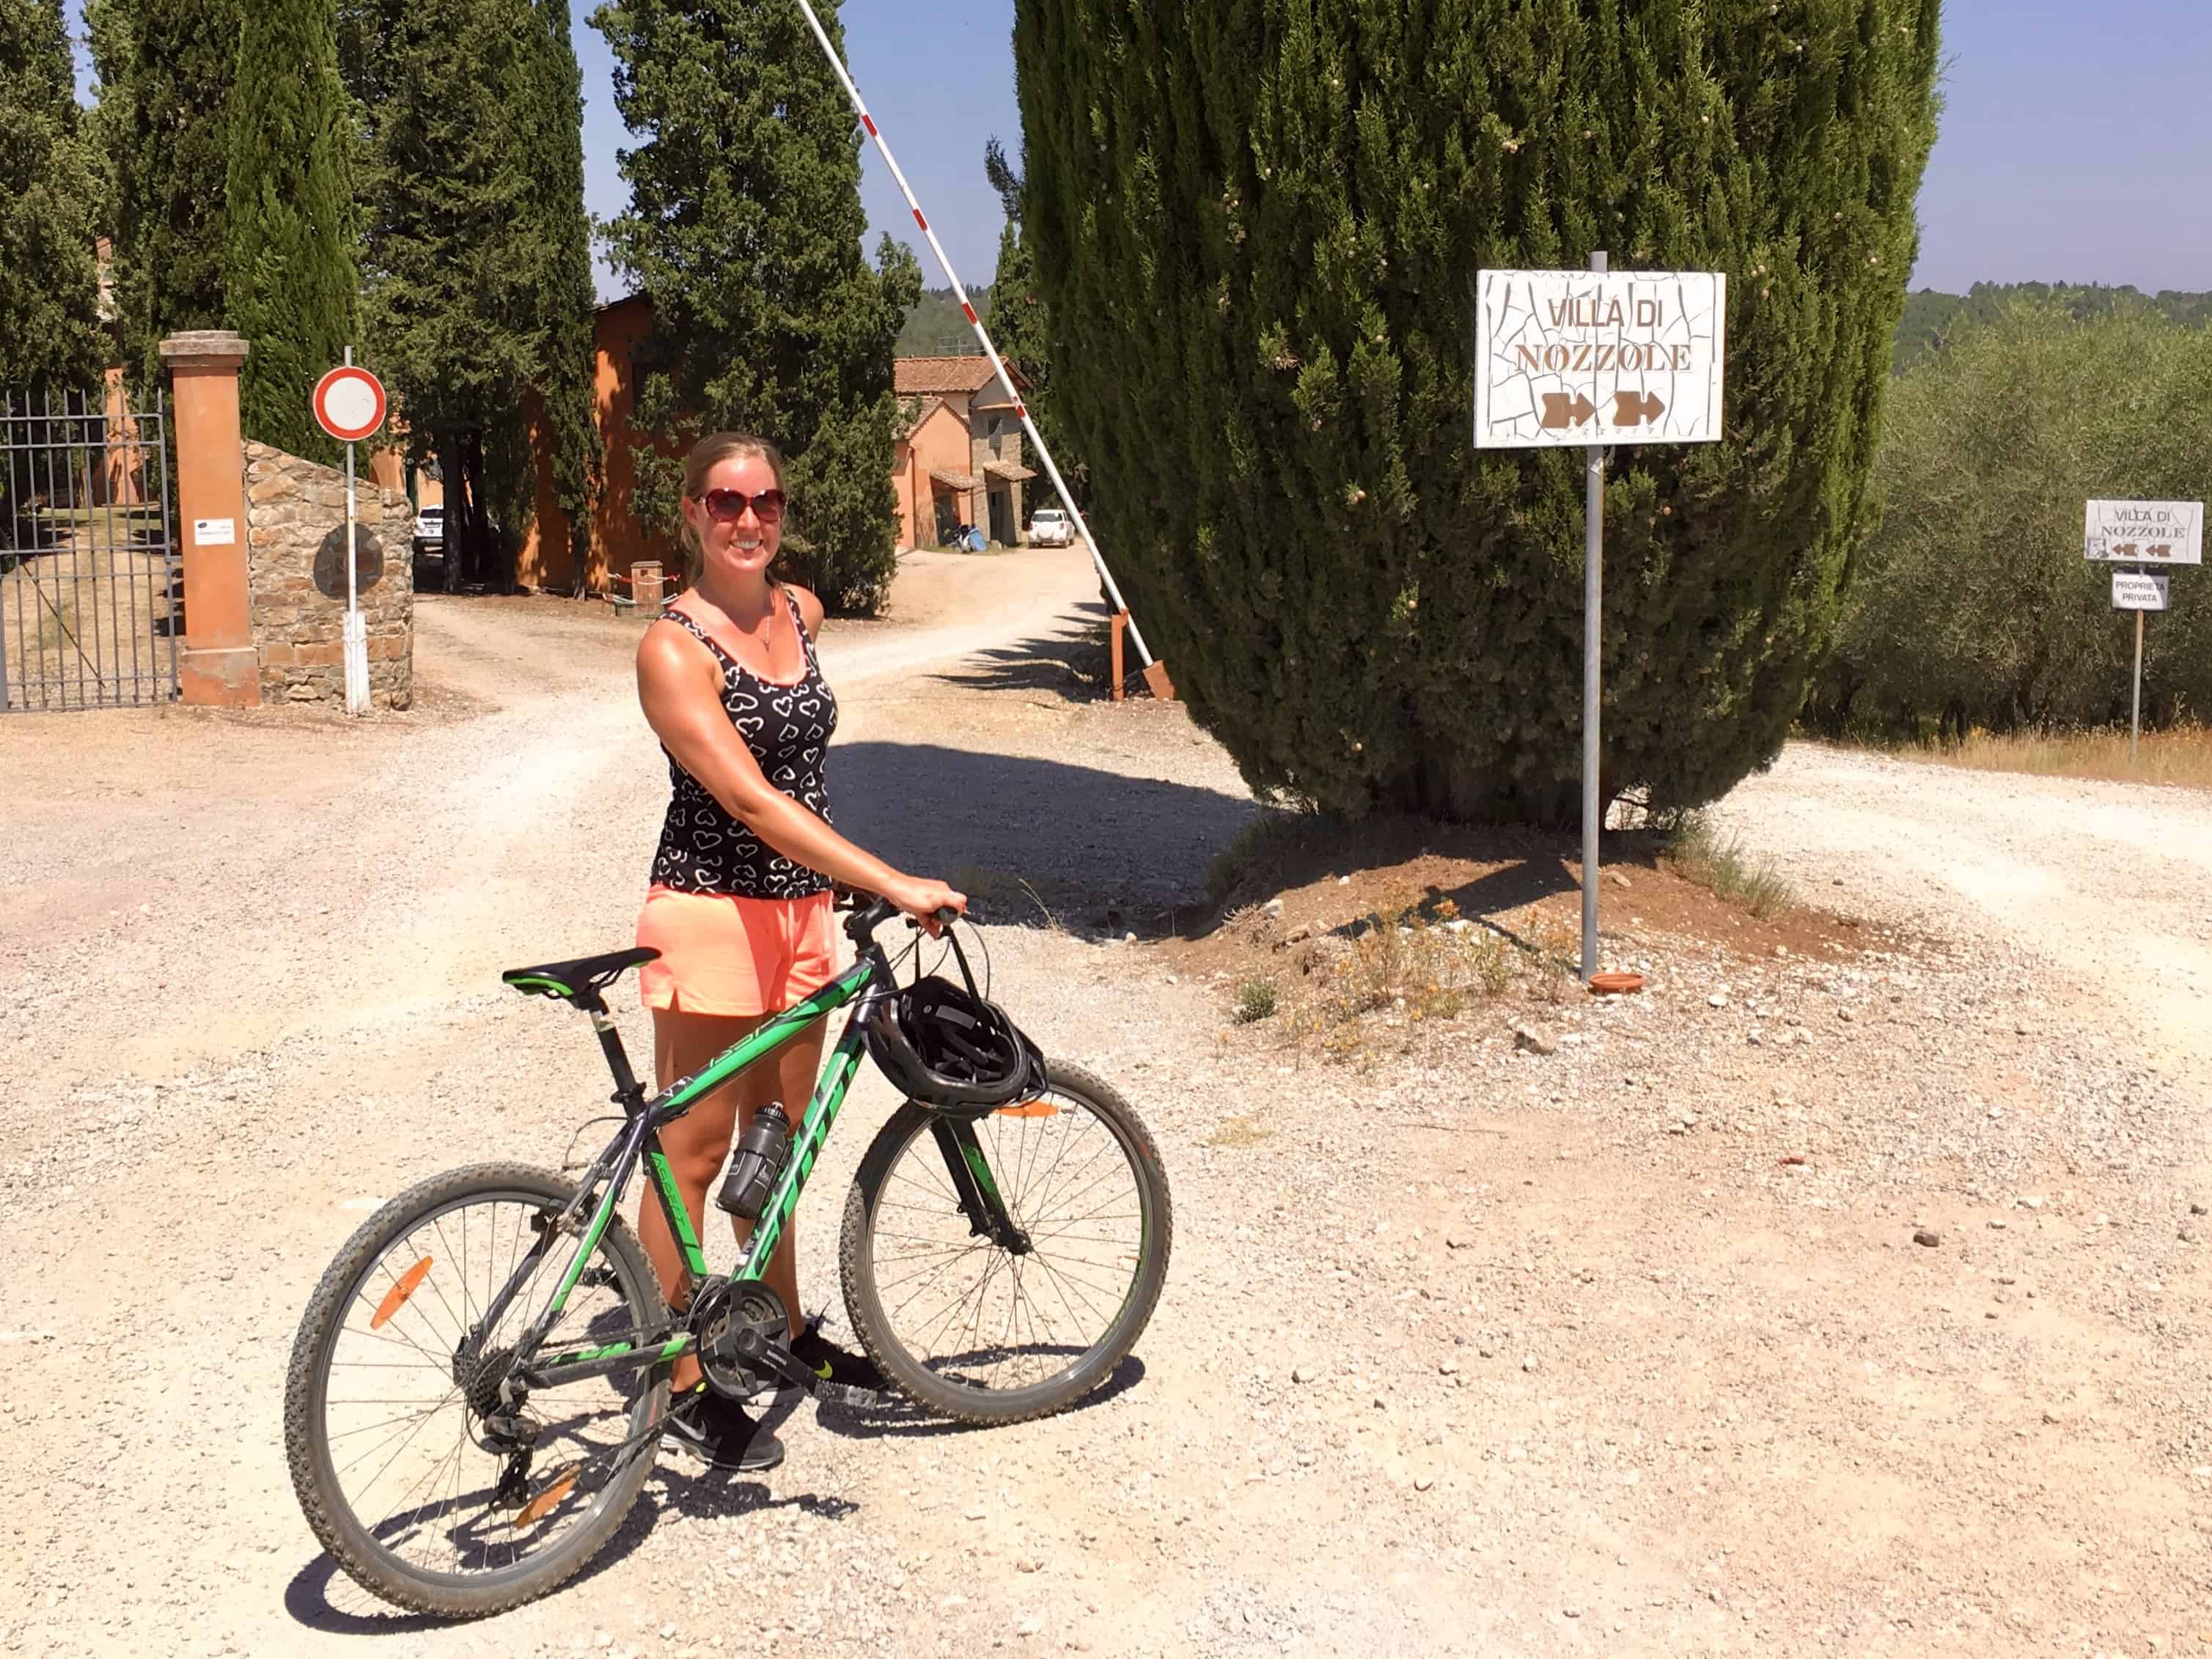 Joannda biking in Tuscany - check transport options before traveling